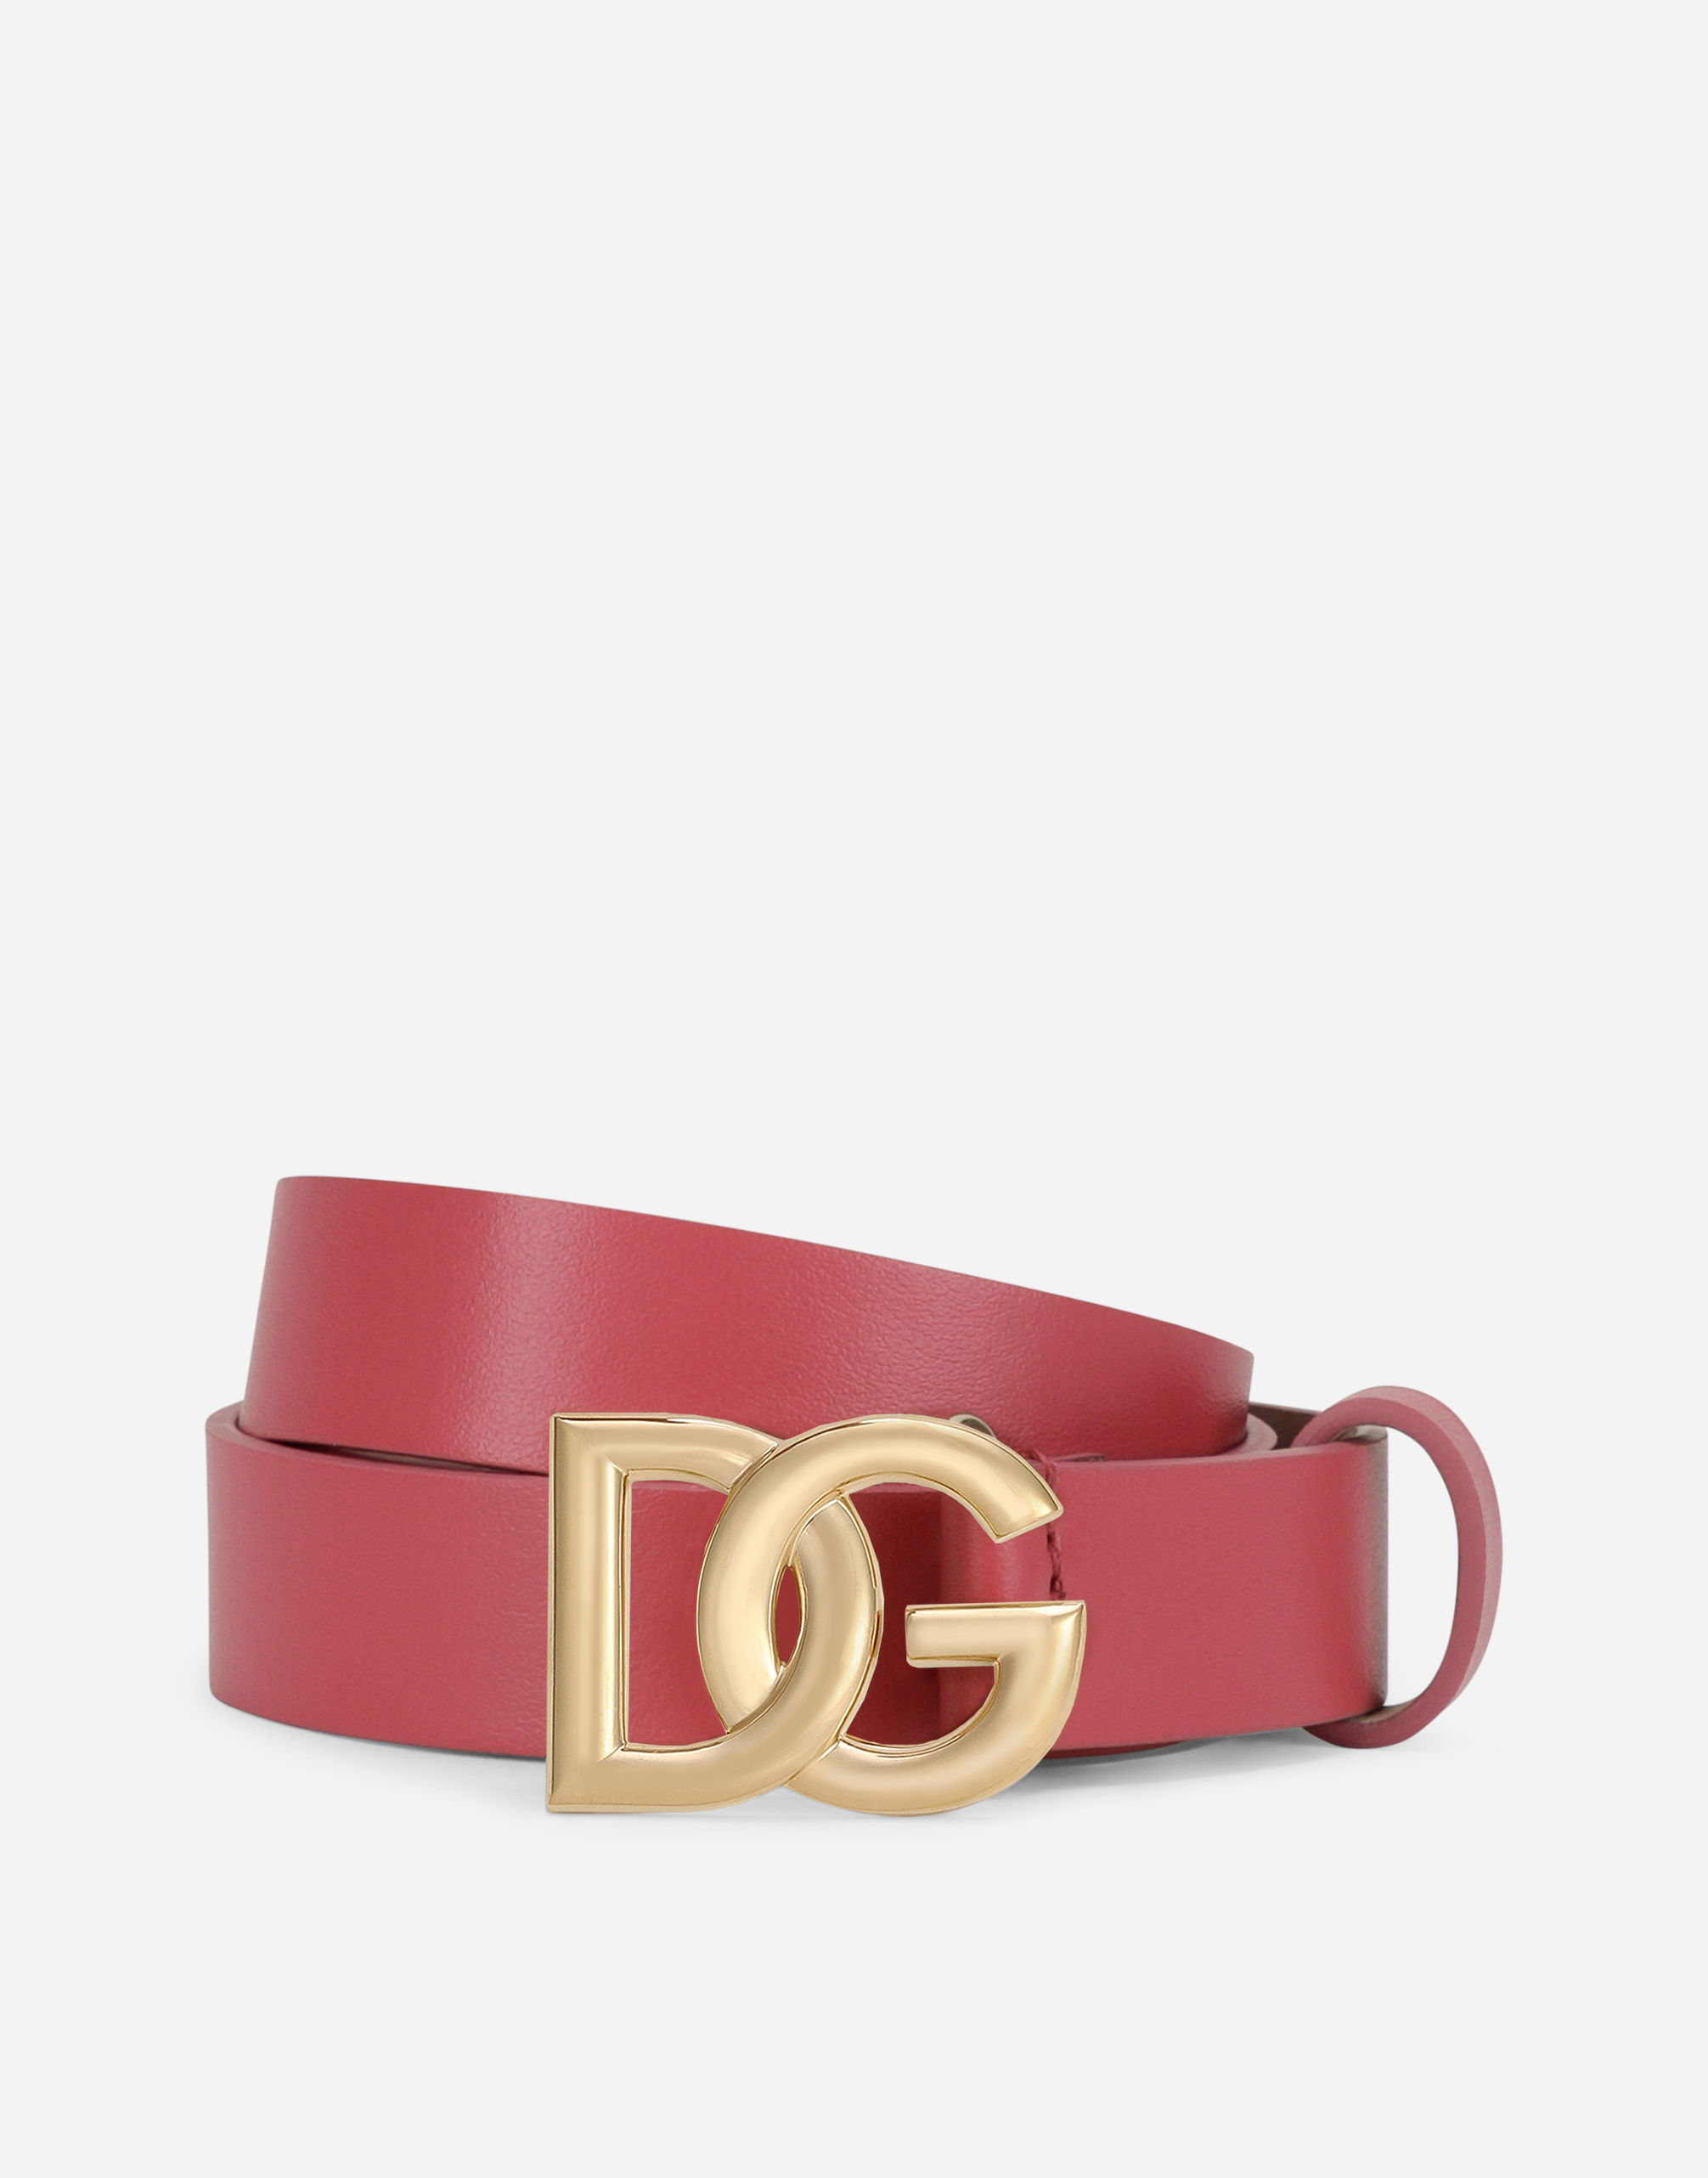 Calfskin belt with DG logo in Fuchsia